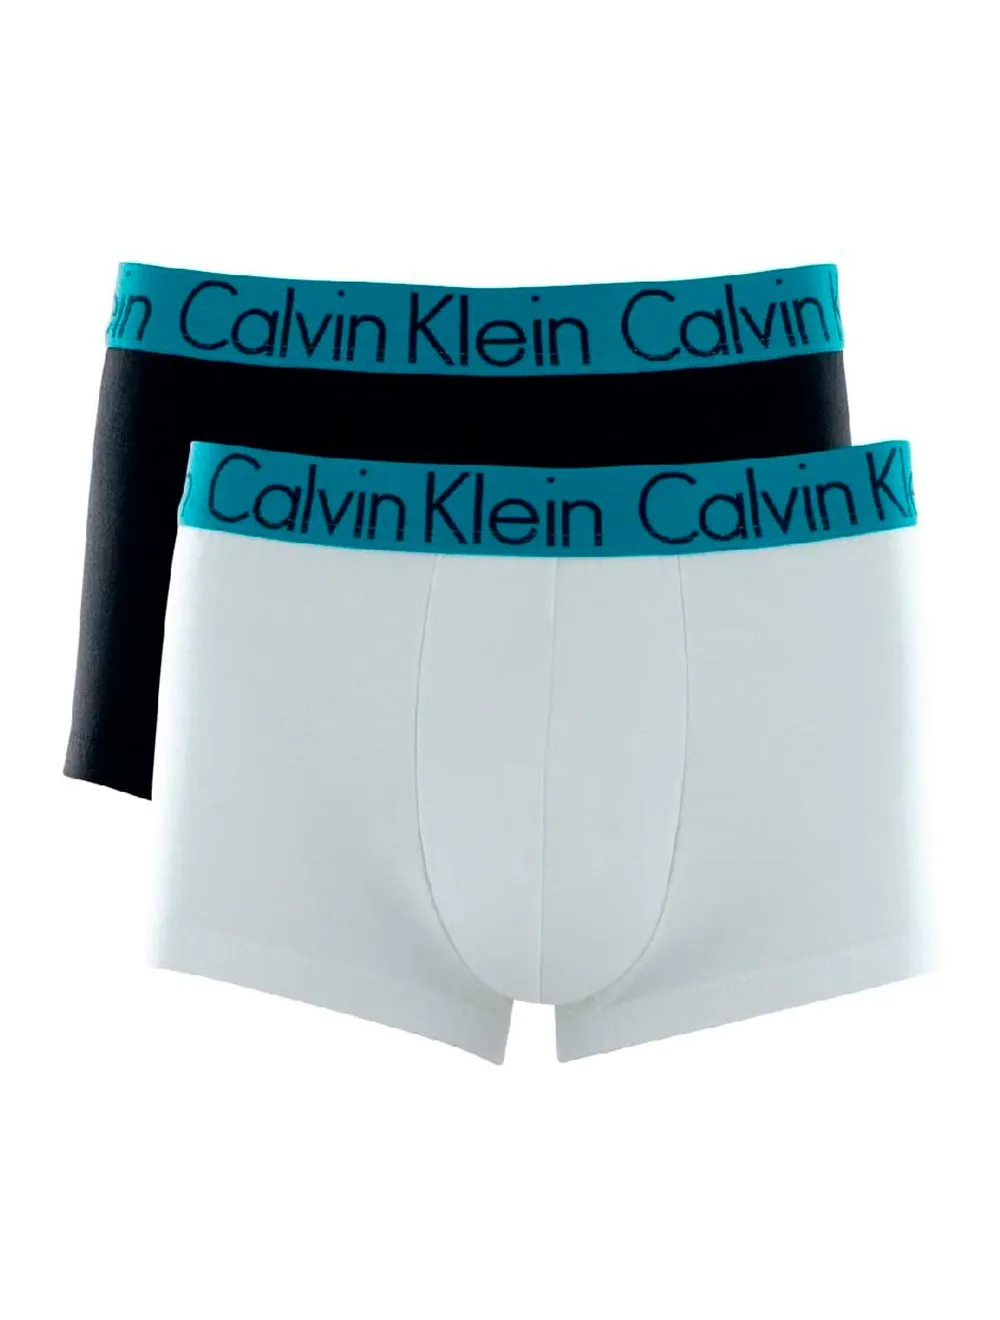 Cueca Calvin Klein Low Rise Cyan Branca e Preta Pack C11.04 BR00 2UN